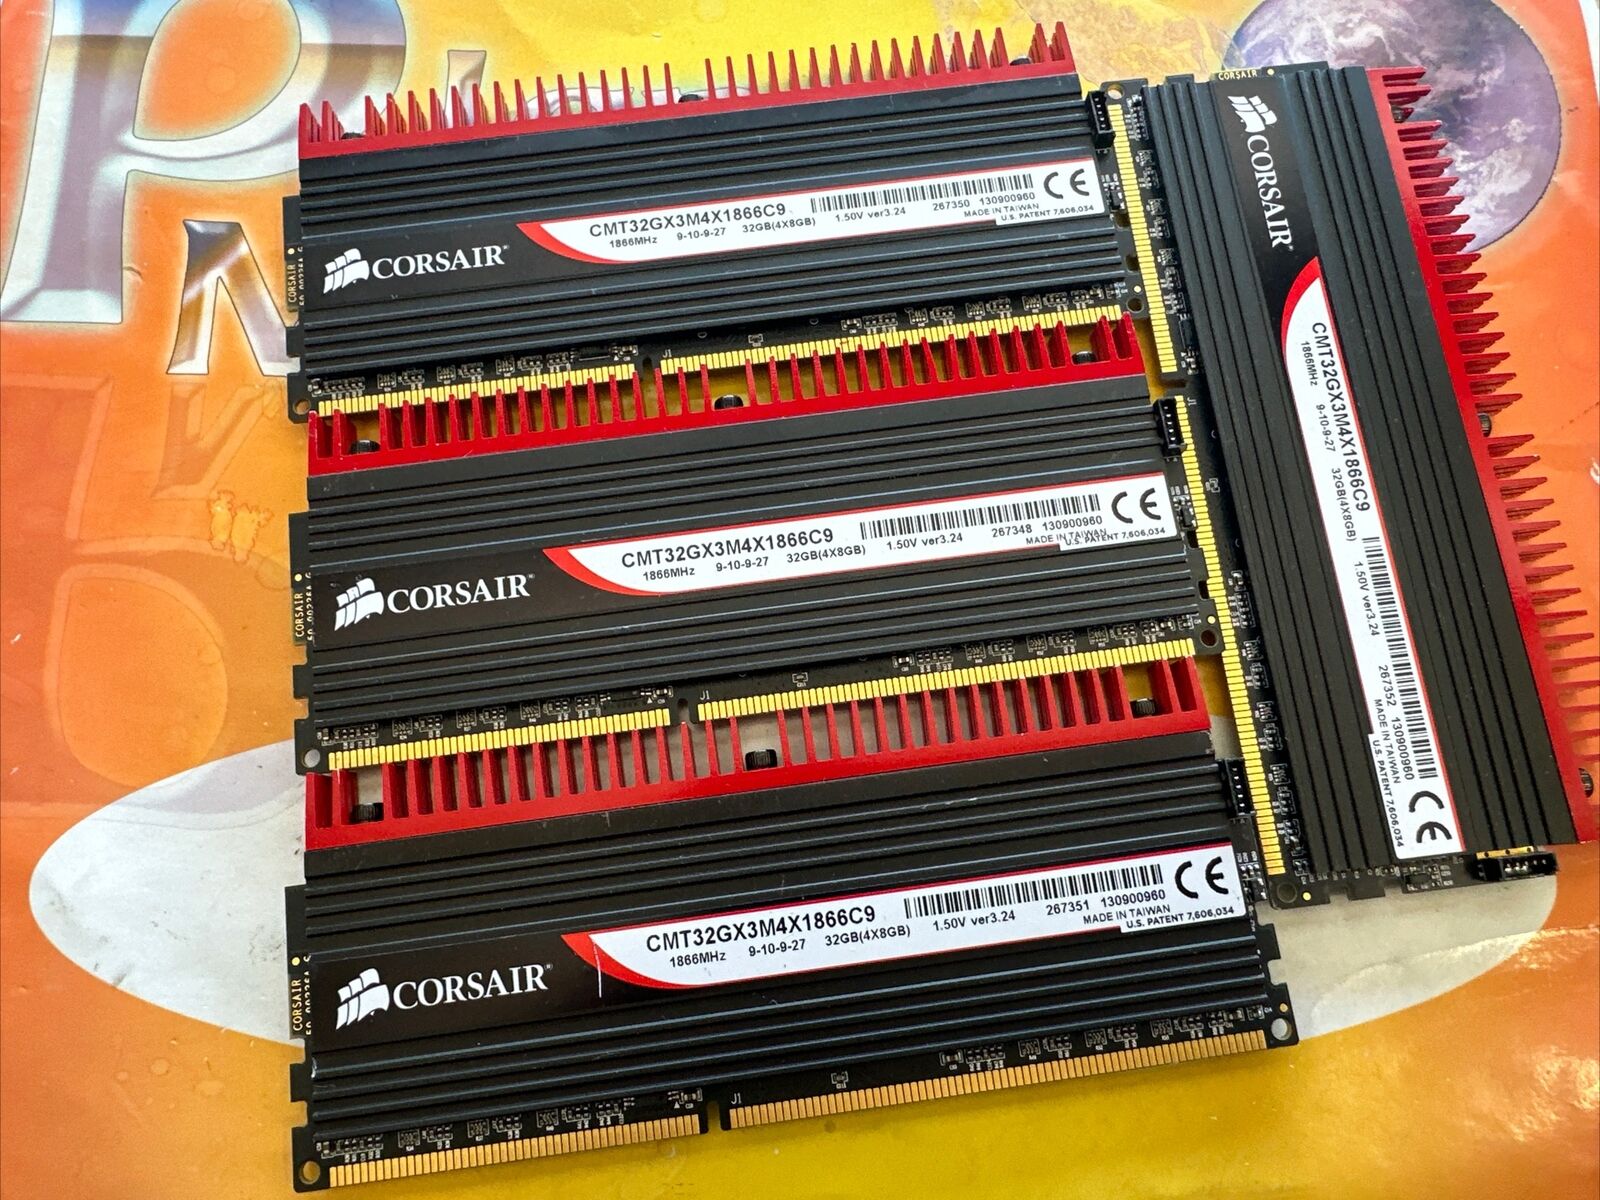 Corsair 32GB (4X8GB) DDR3 PC3-14900 1866 NON ECC LOW DENSITY CMT32GX3M4X1866C9